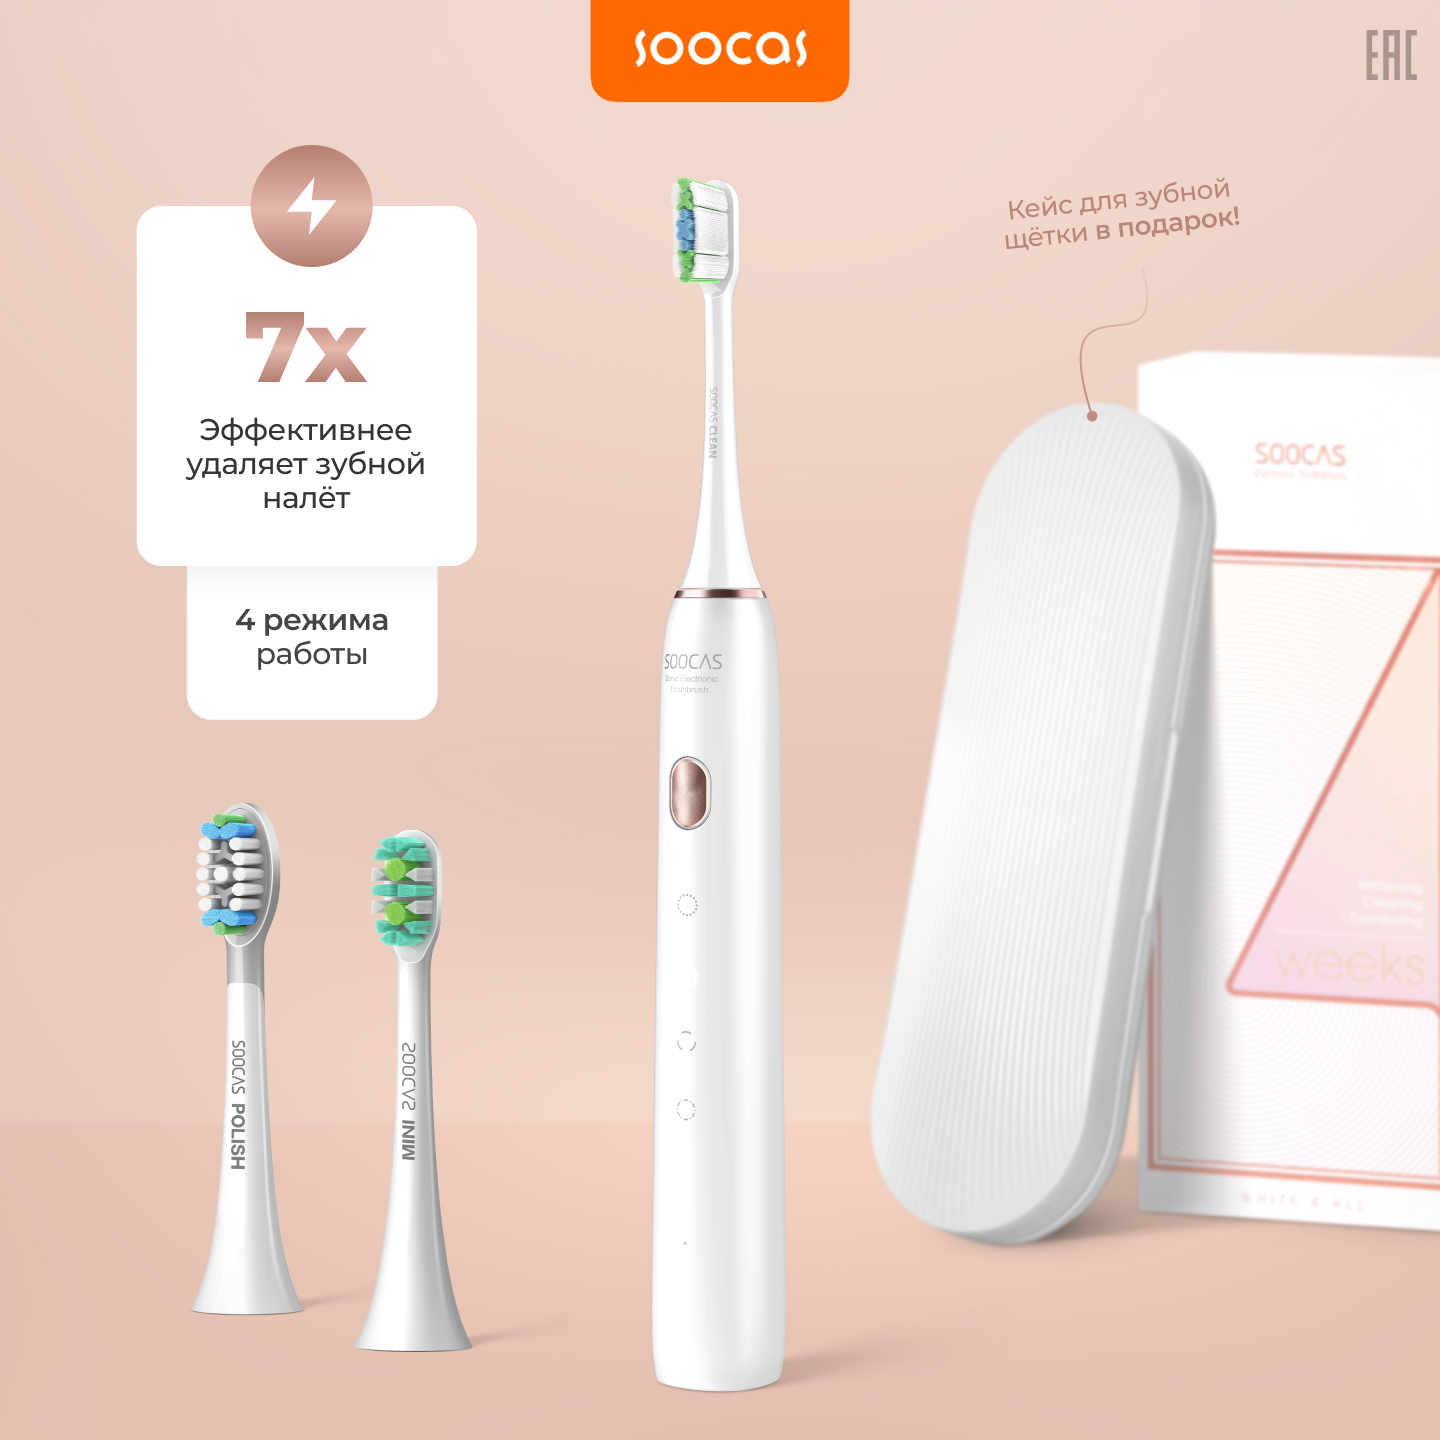    Soocas Sonic Electric Toothbrush X3U RU (3   ), 